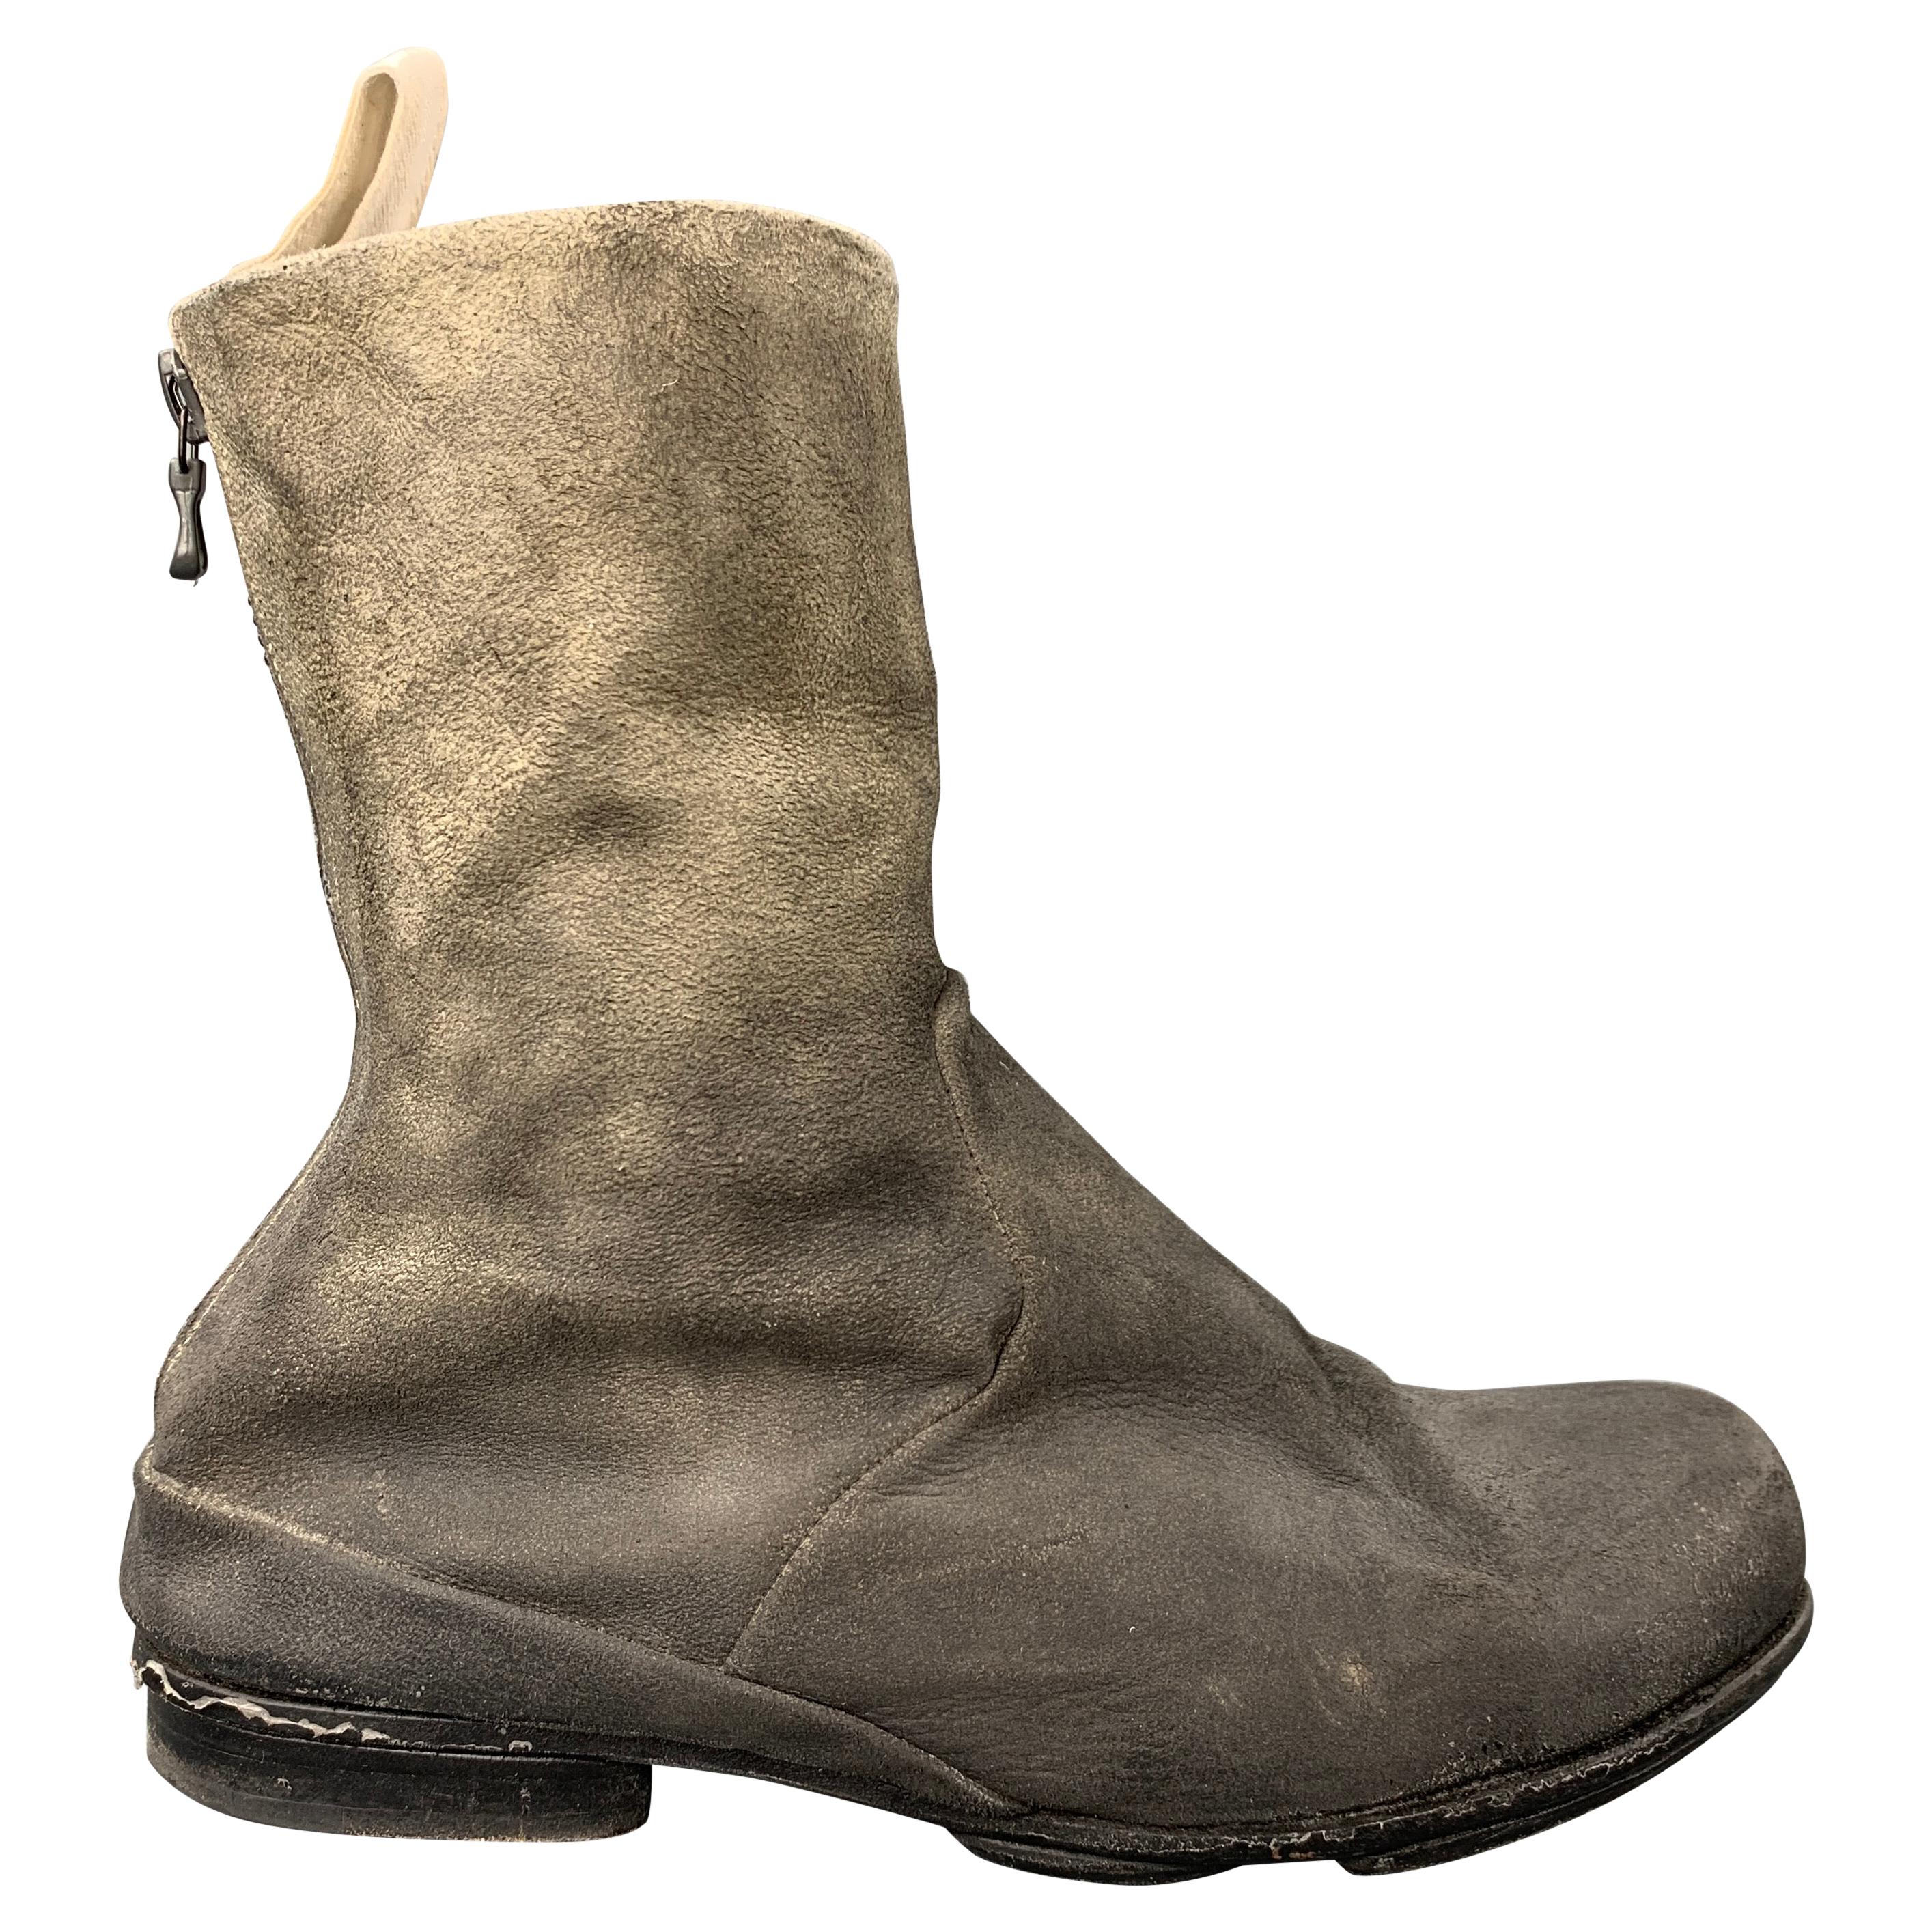 VOLGA VOLGA Size 7.5 Grey Distressed Leather Ankle Boots